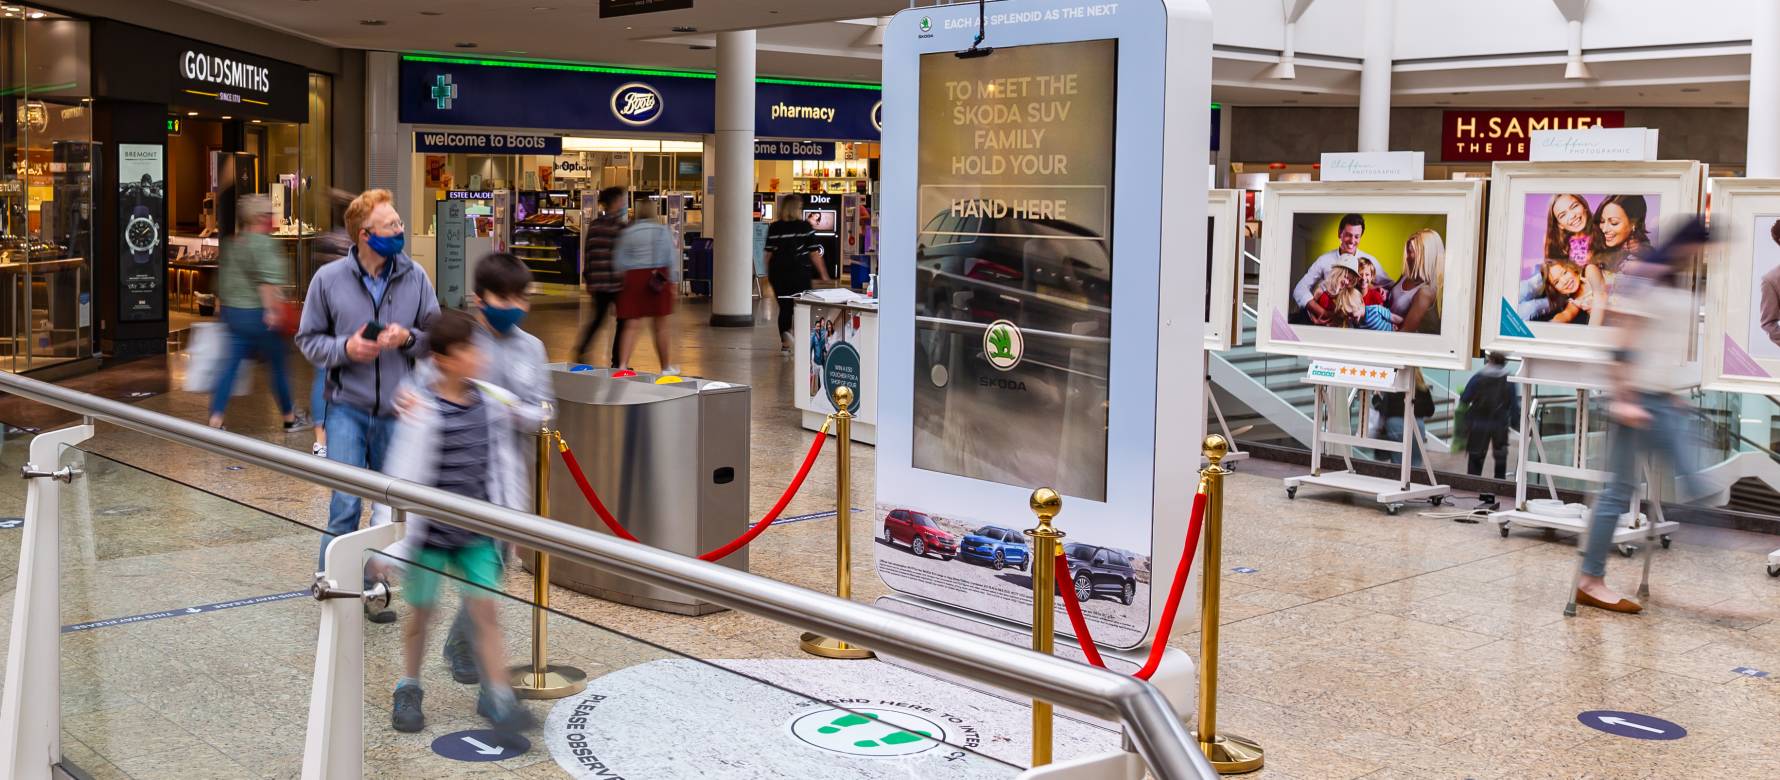 Digital screen in a busy shopping mall near Boots & H Samuel showing Skoda advert